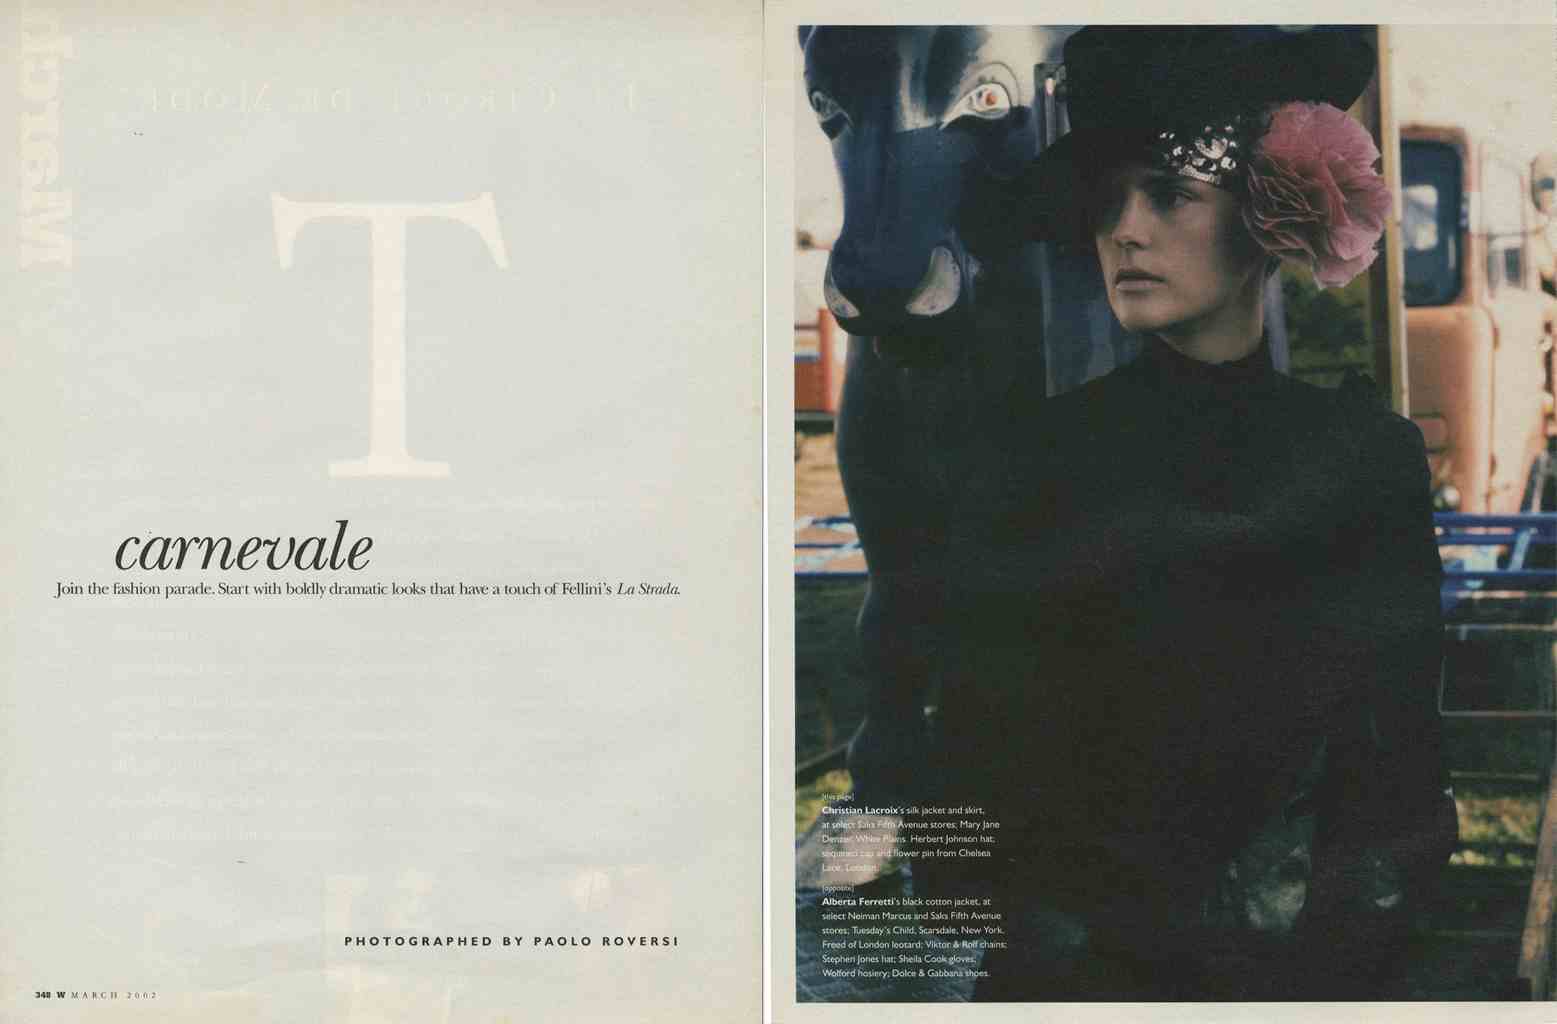 W MAGAZINE - 2002
Photographer: Paolo Roversi
Model: Stella Tennant
Stylist: Alex White
Location: Palermo - Italy